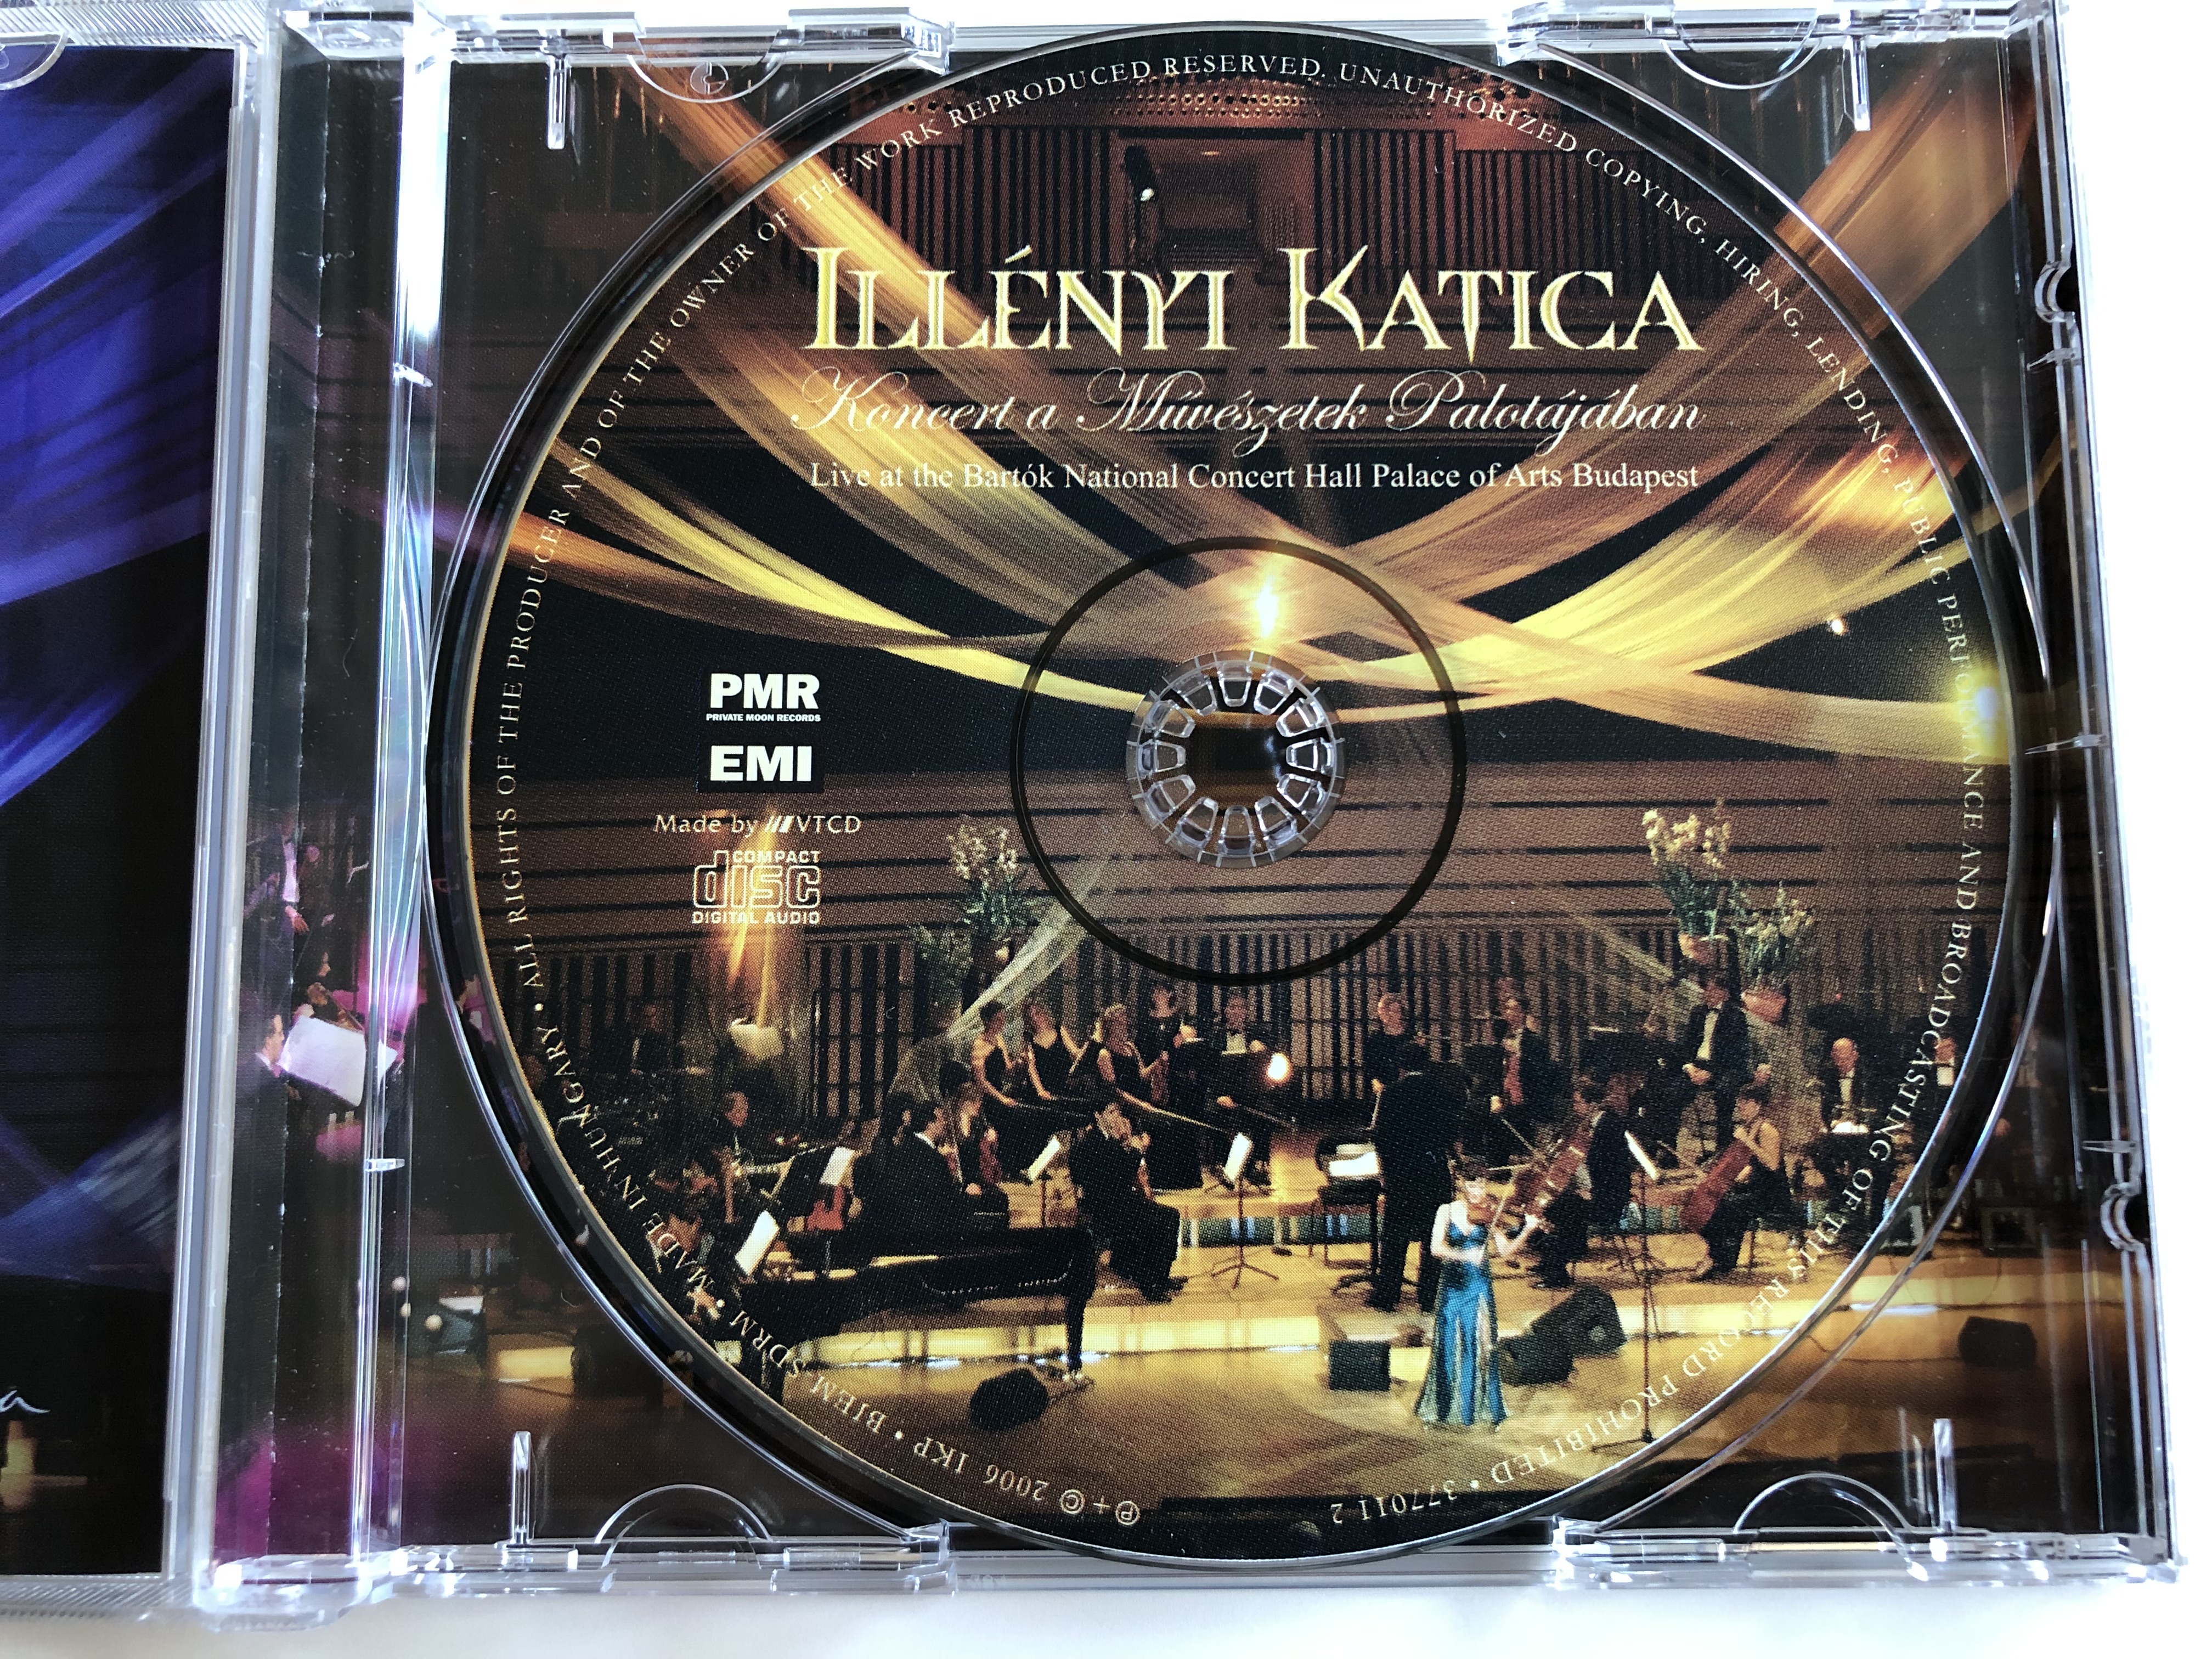 ill-nyi-katica-live-at-the-national-concert-hall-palace-of-arts-budapest-koncert-a-m-v-szetek-palot-j-ban-audio-cd-2006-ikp-3-.jpg